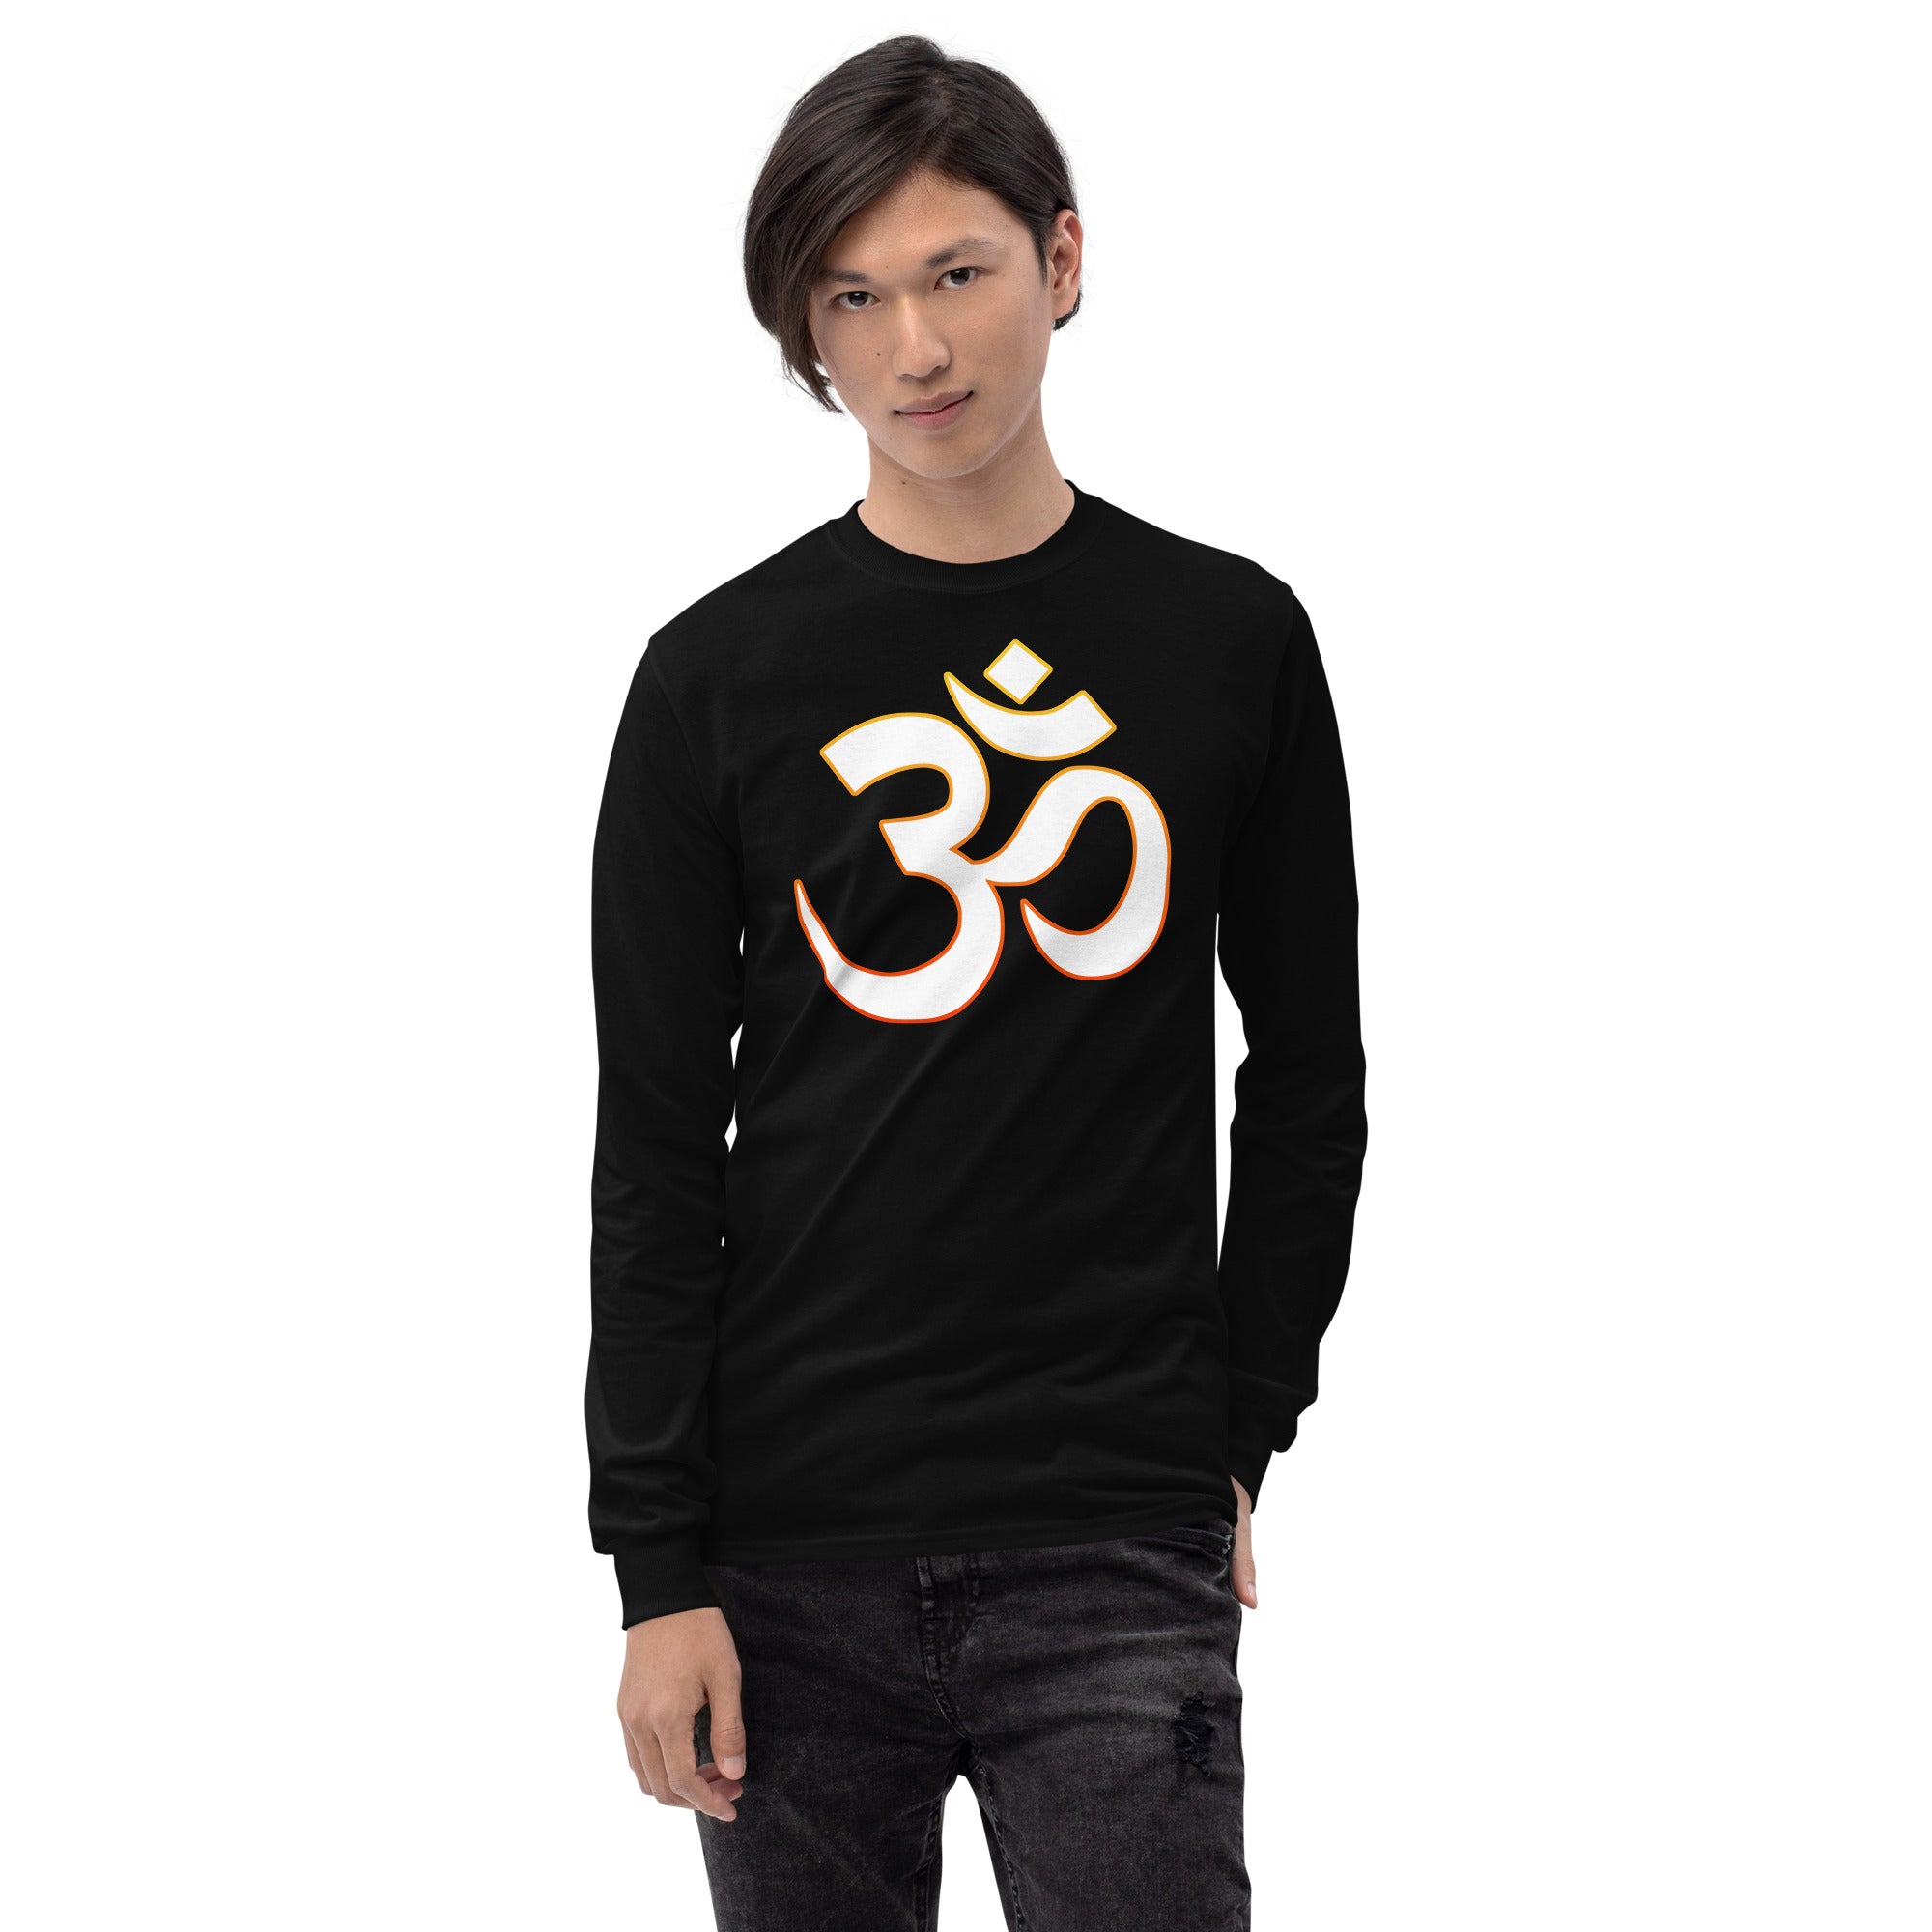 OM Sacred Spiritual Vibration of the Universe Long Sleeve Shirt